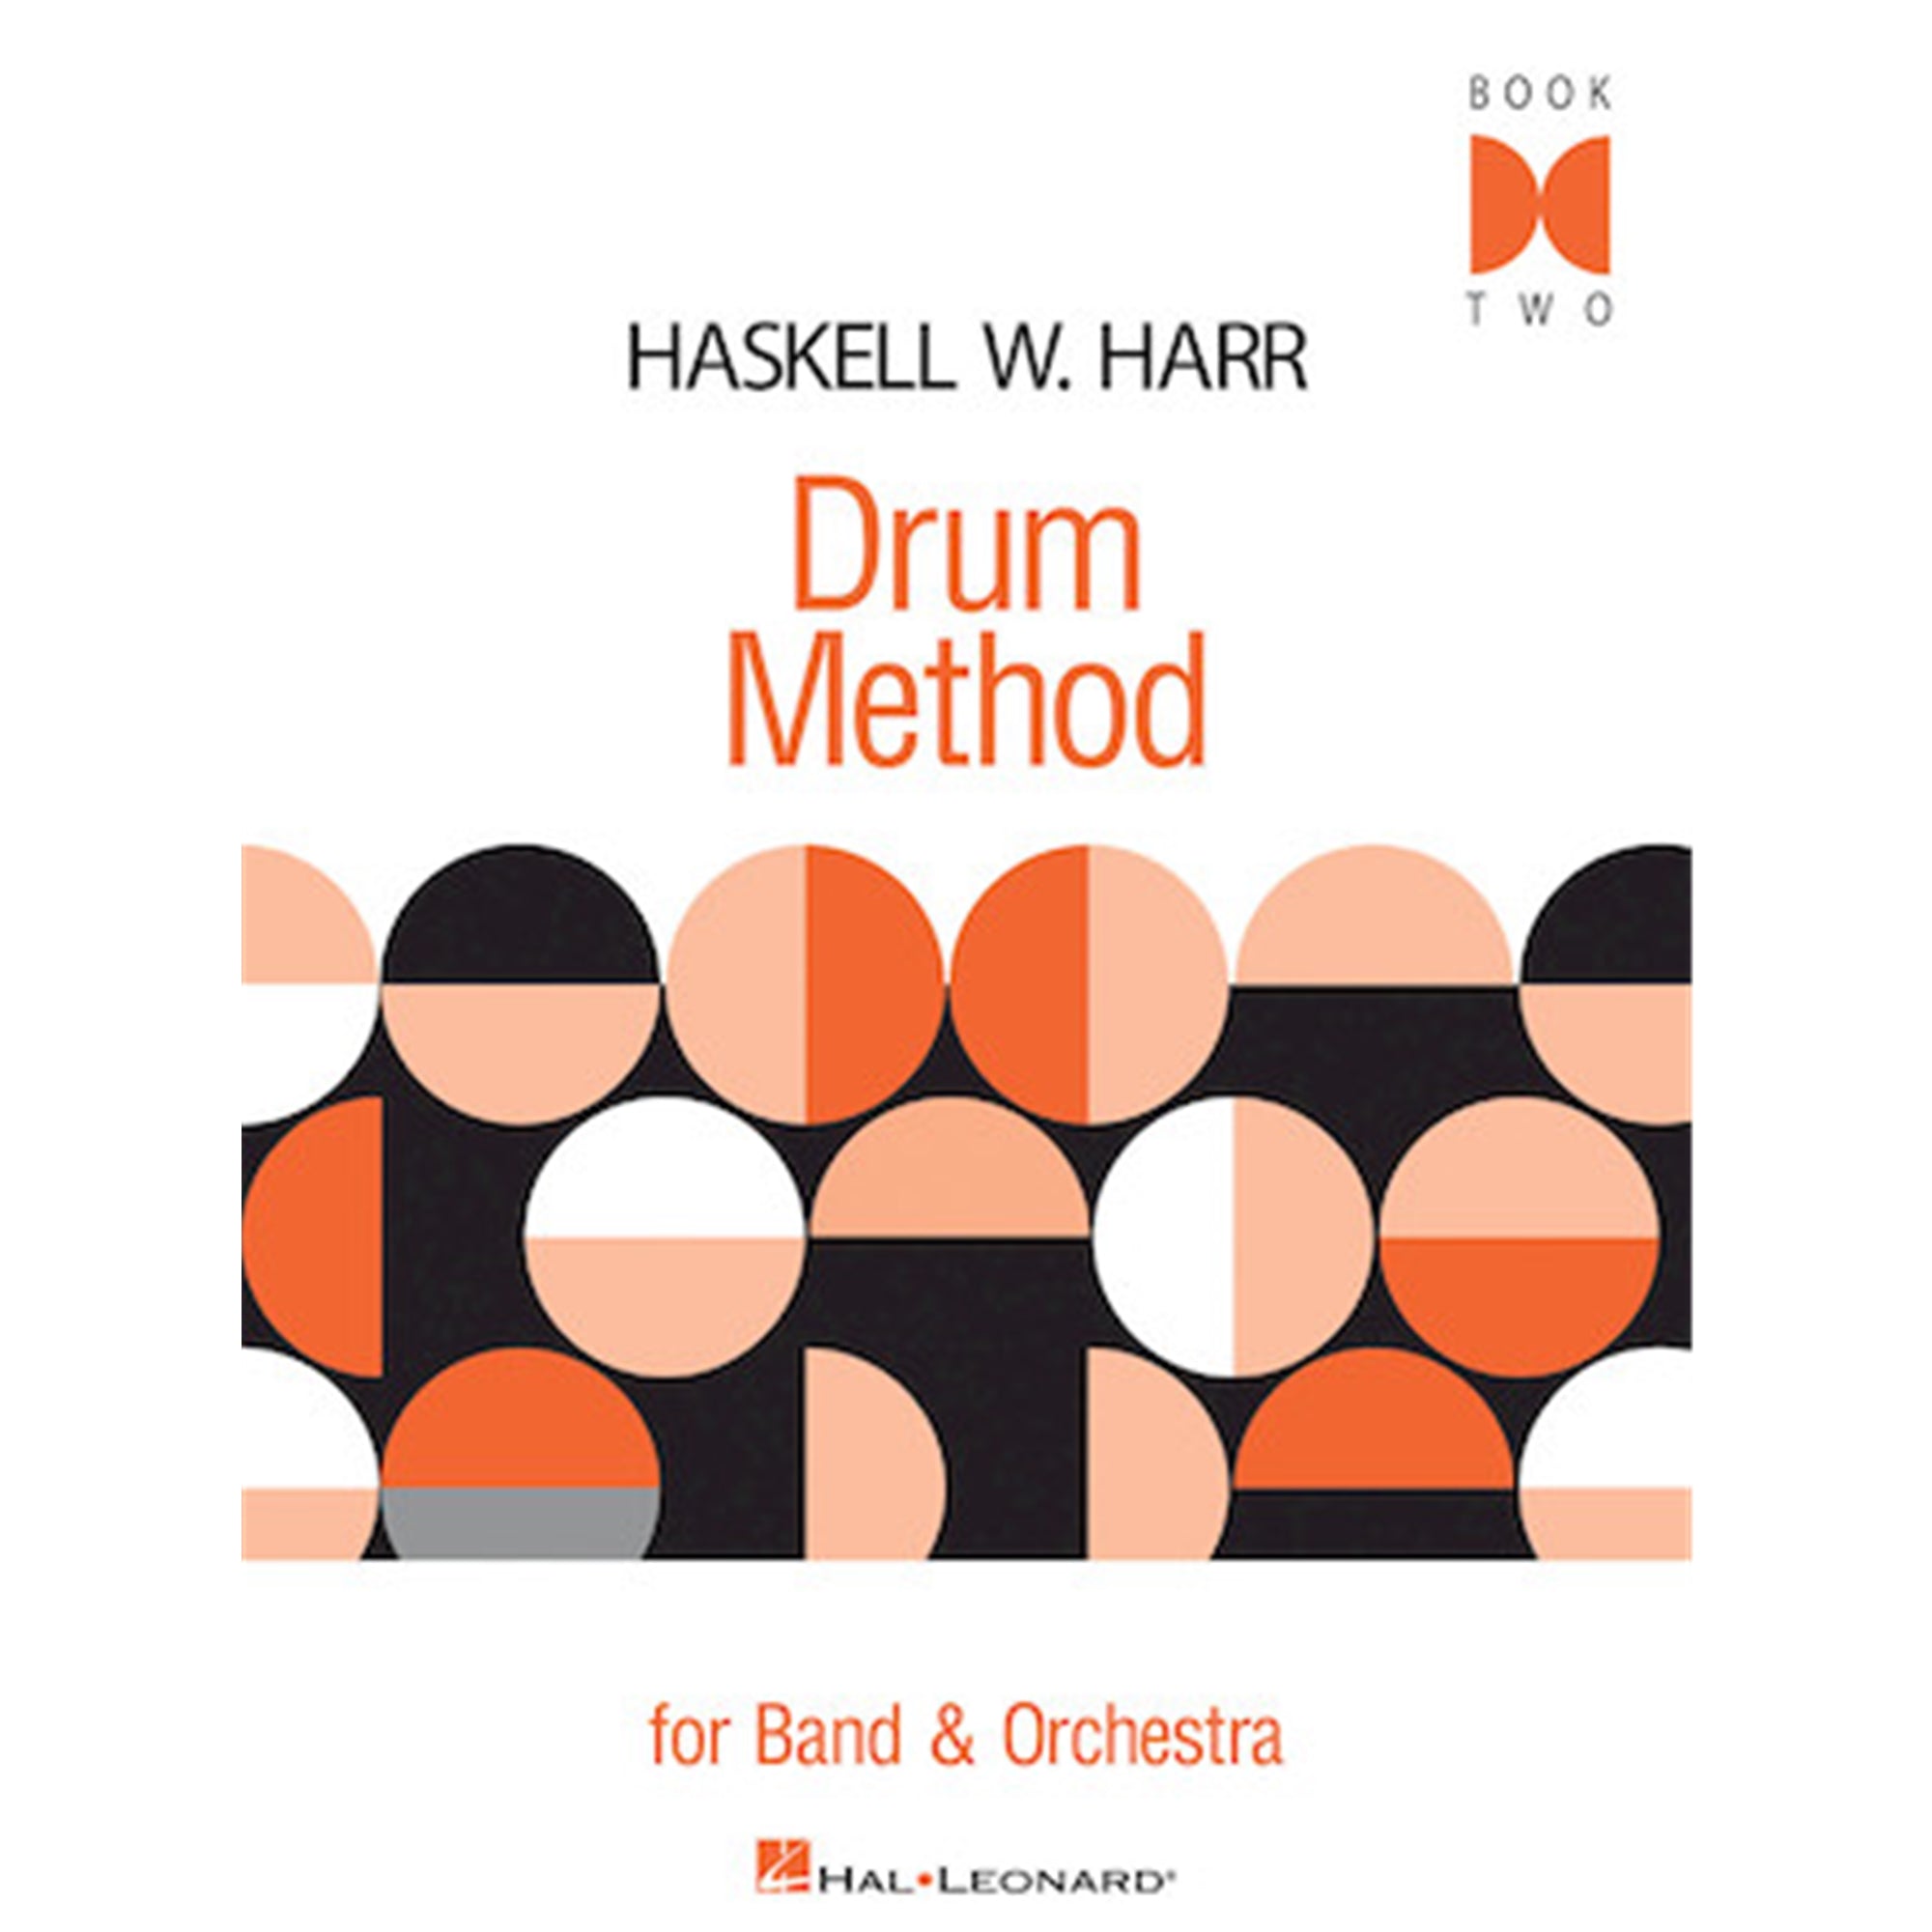 HAL LEONARD 6620097 Haskell W. Harr Drum Method Book 2